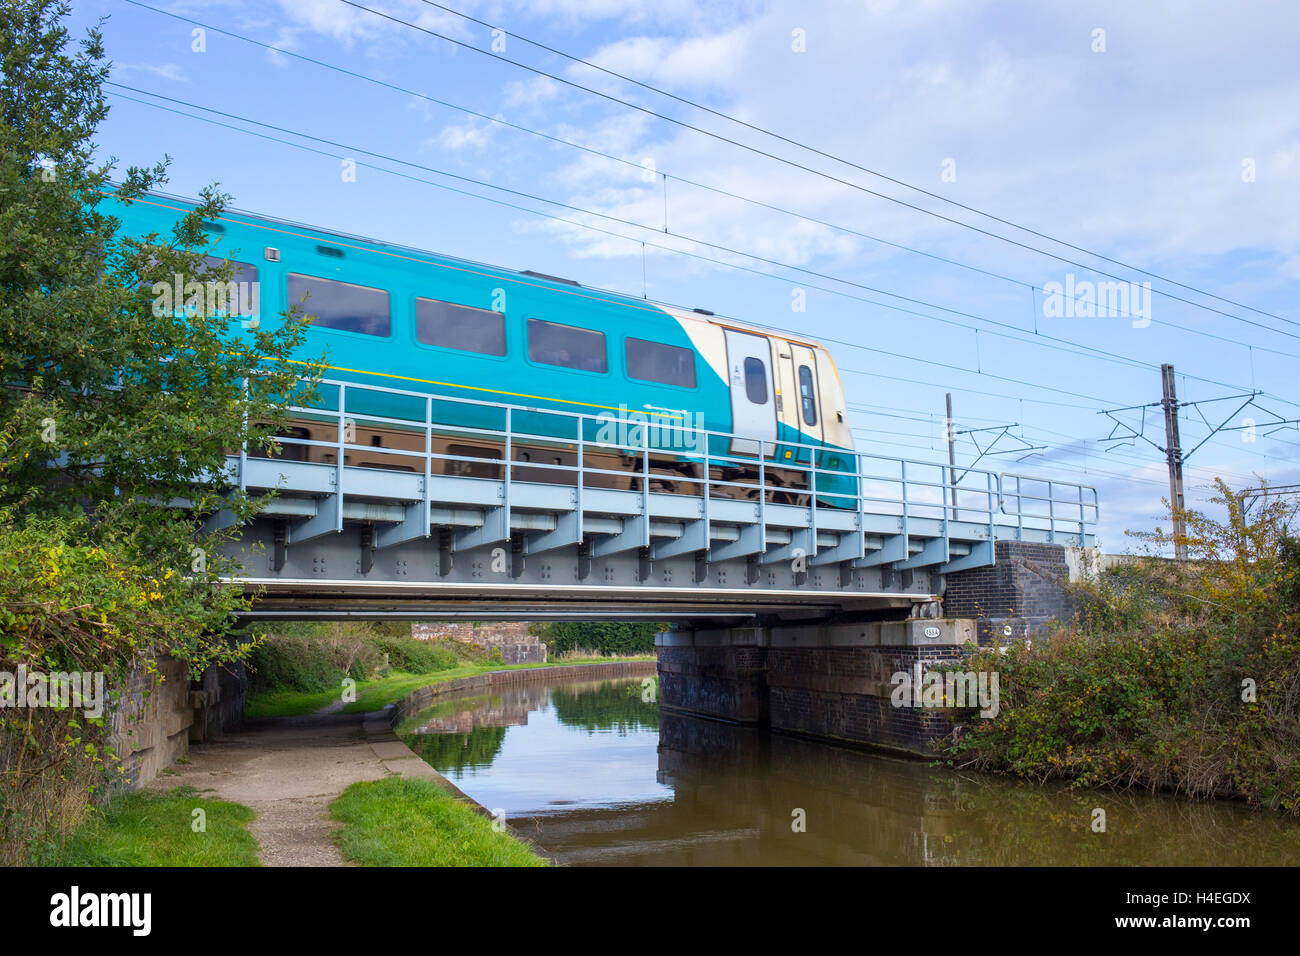 Passing train on railway bridge over Trent and Mersey canal in Cheshire UK Stock Photo